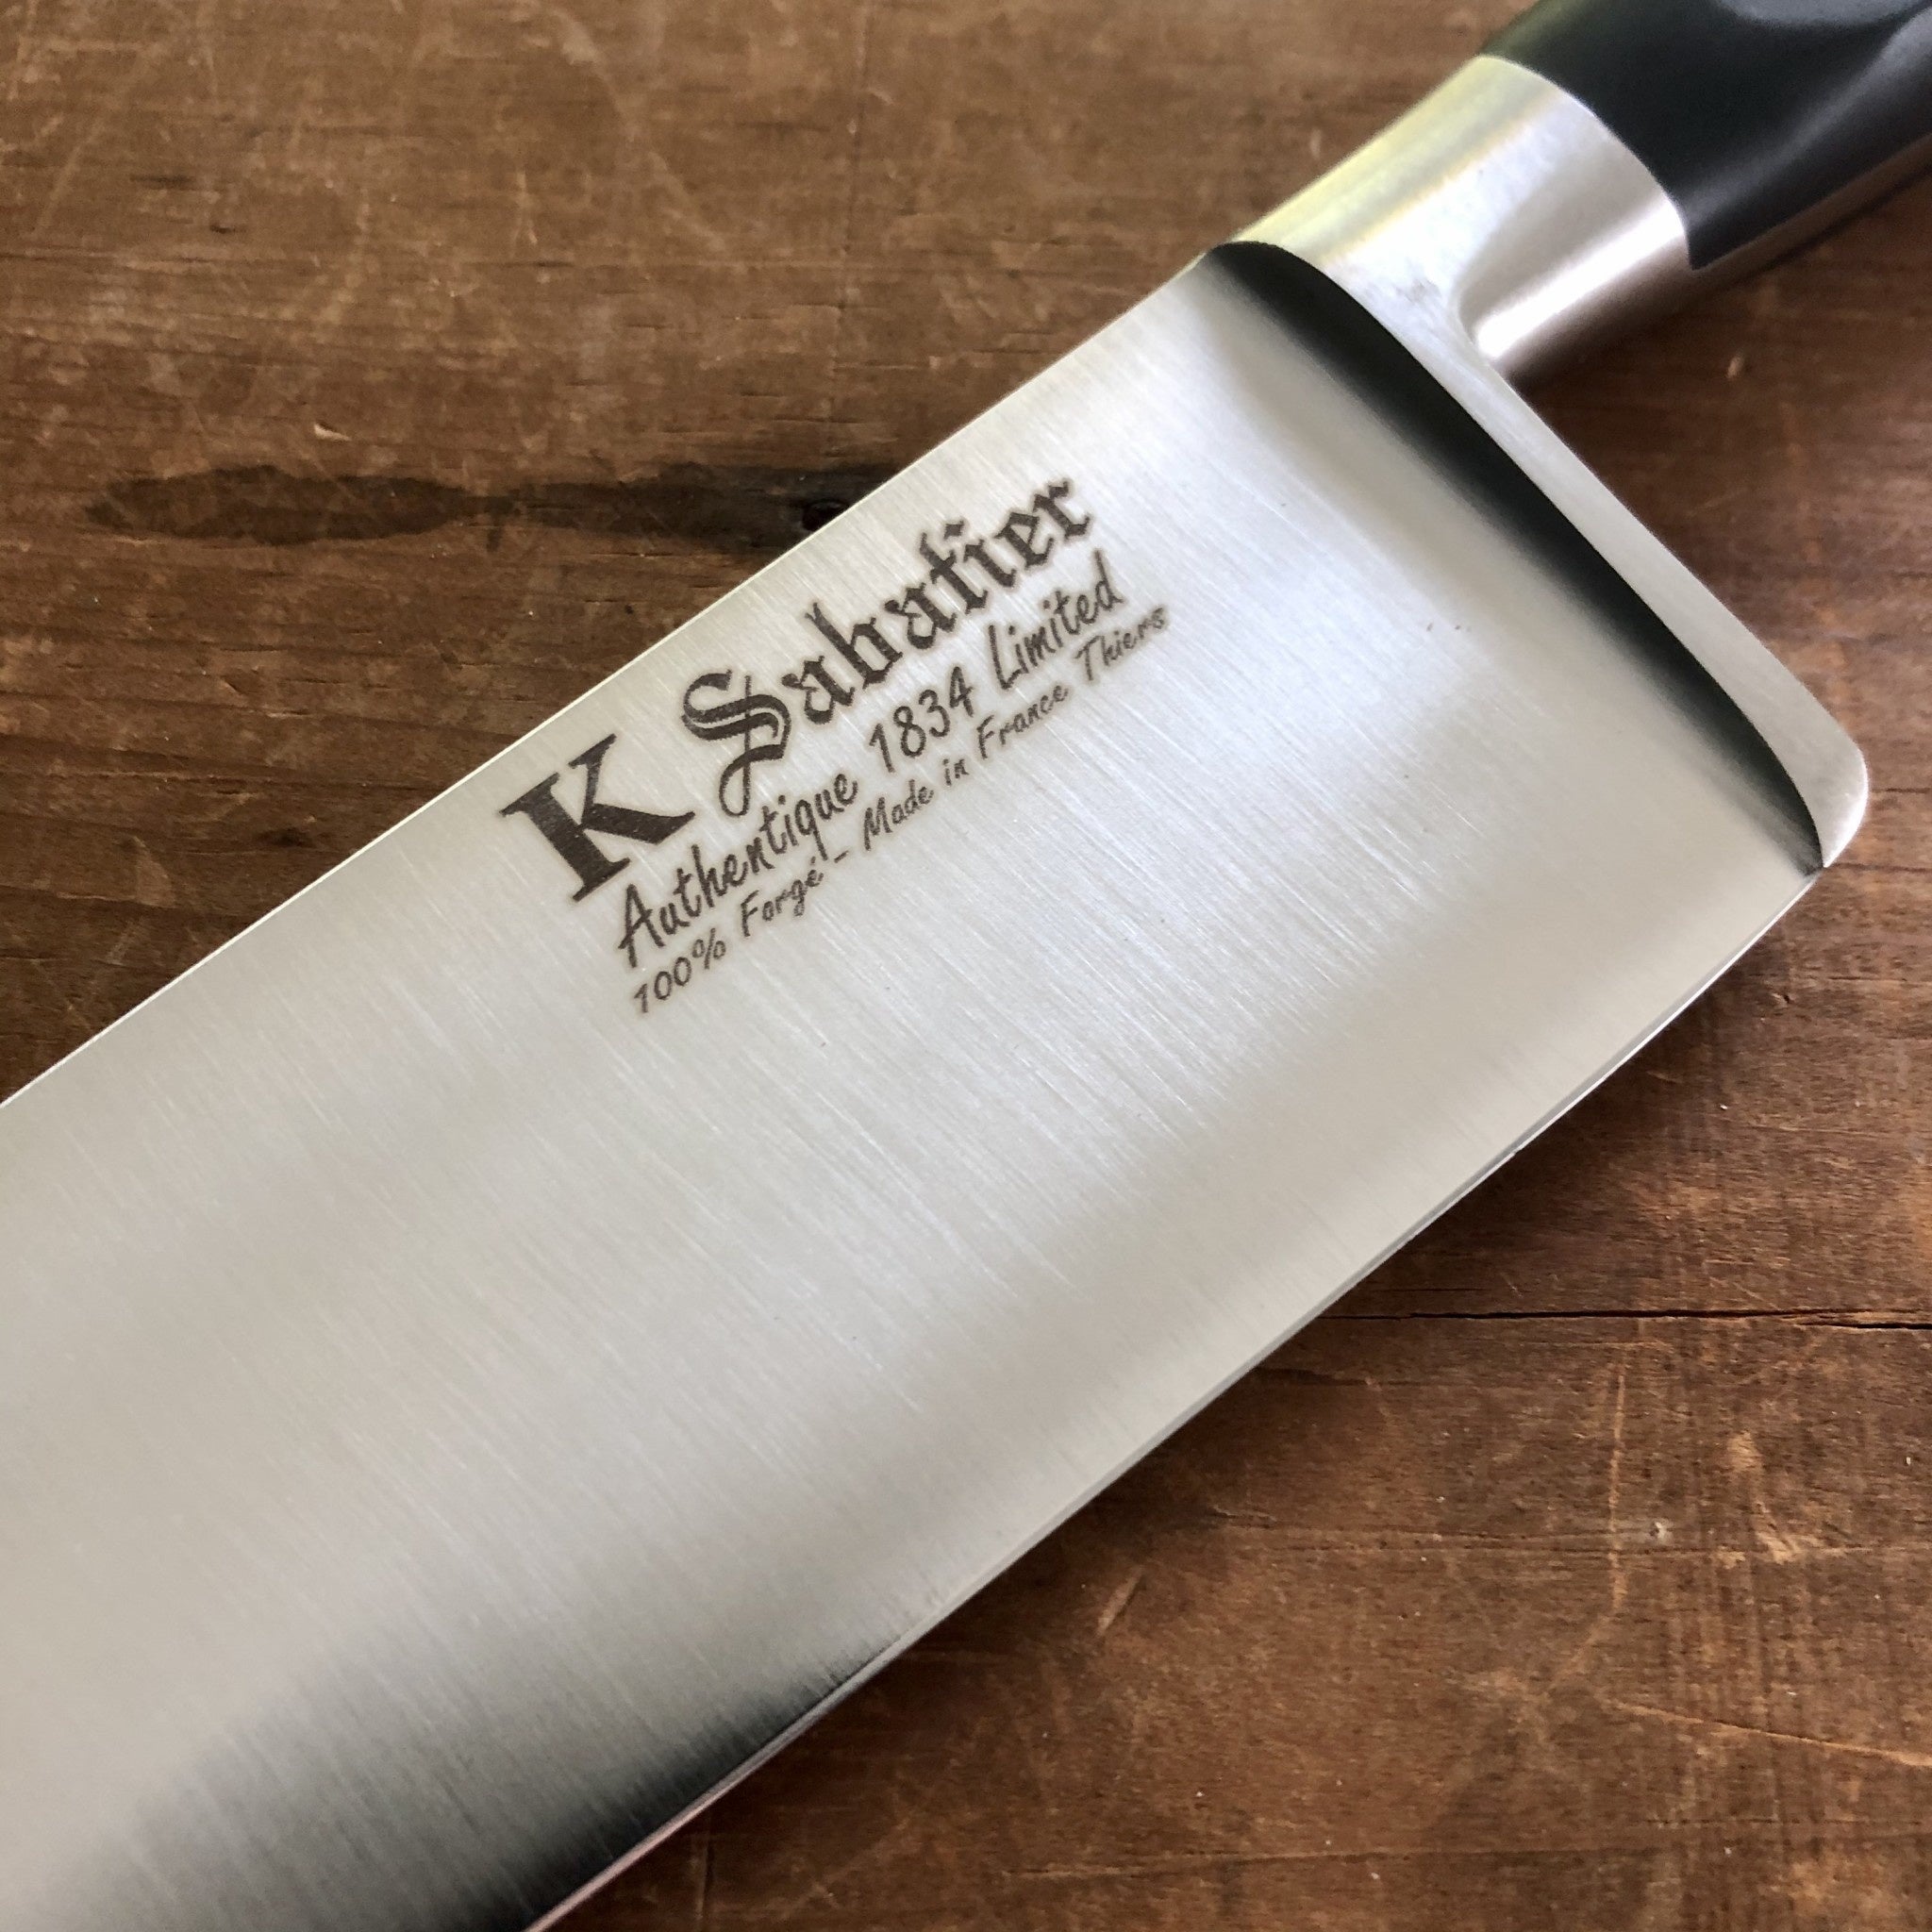 Sabatier Edgekeeper 8-in. Chef Knife with Sheath